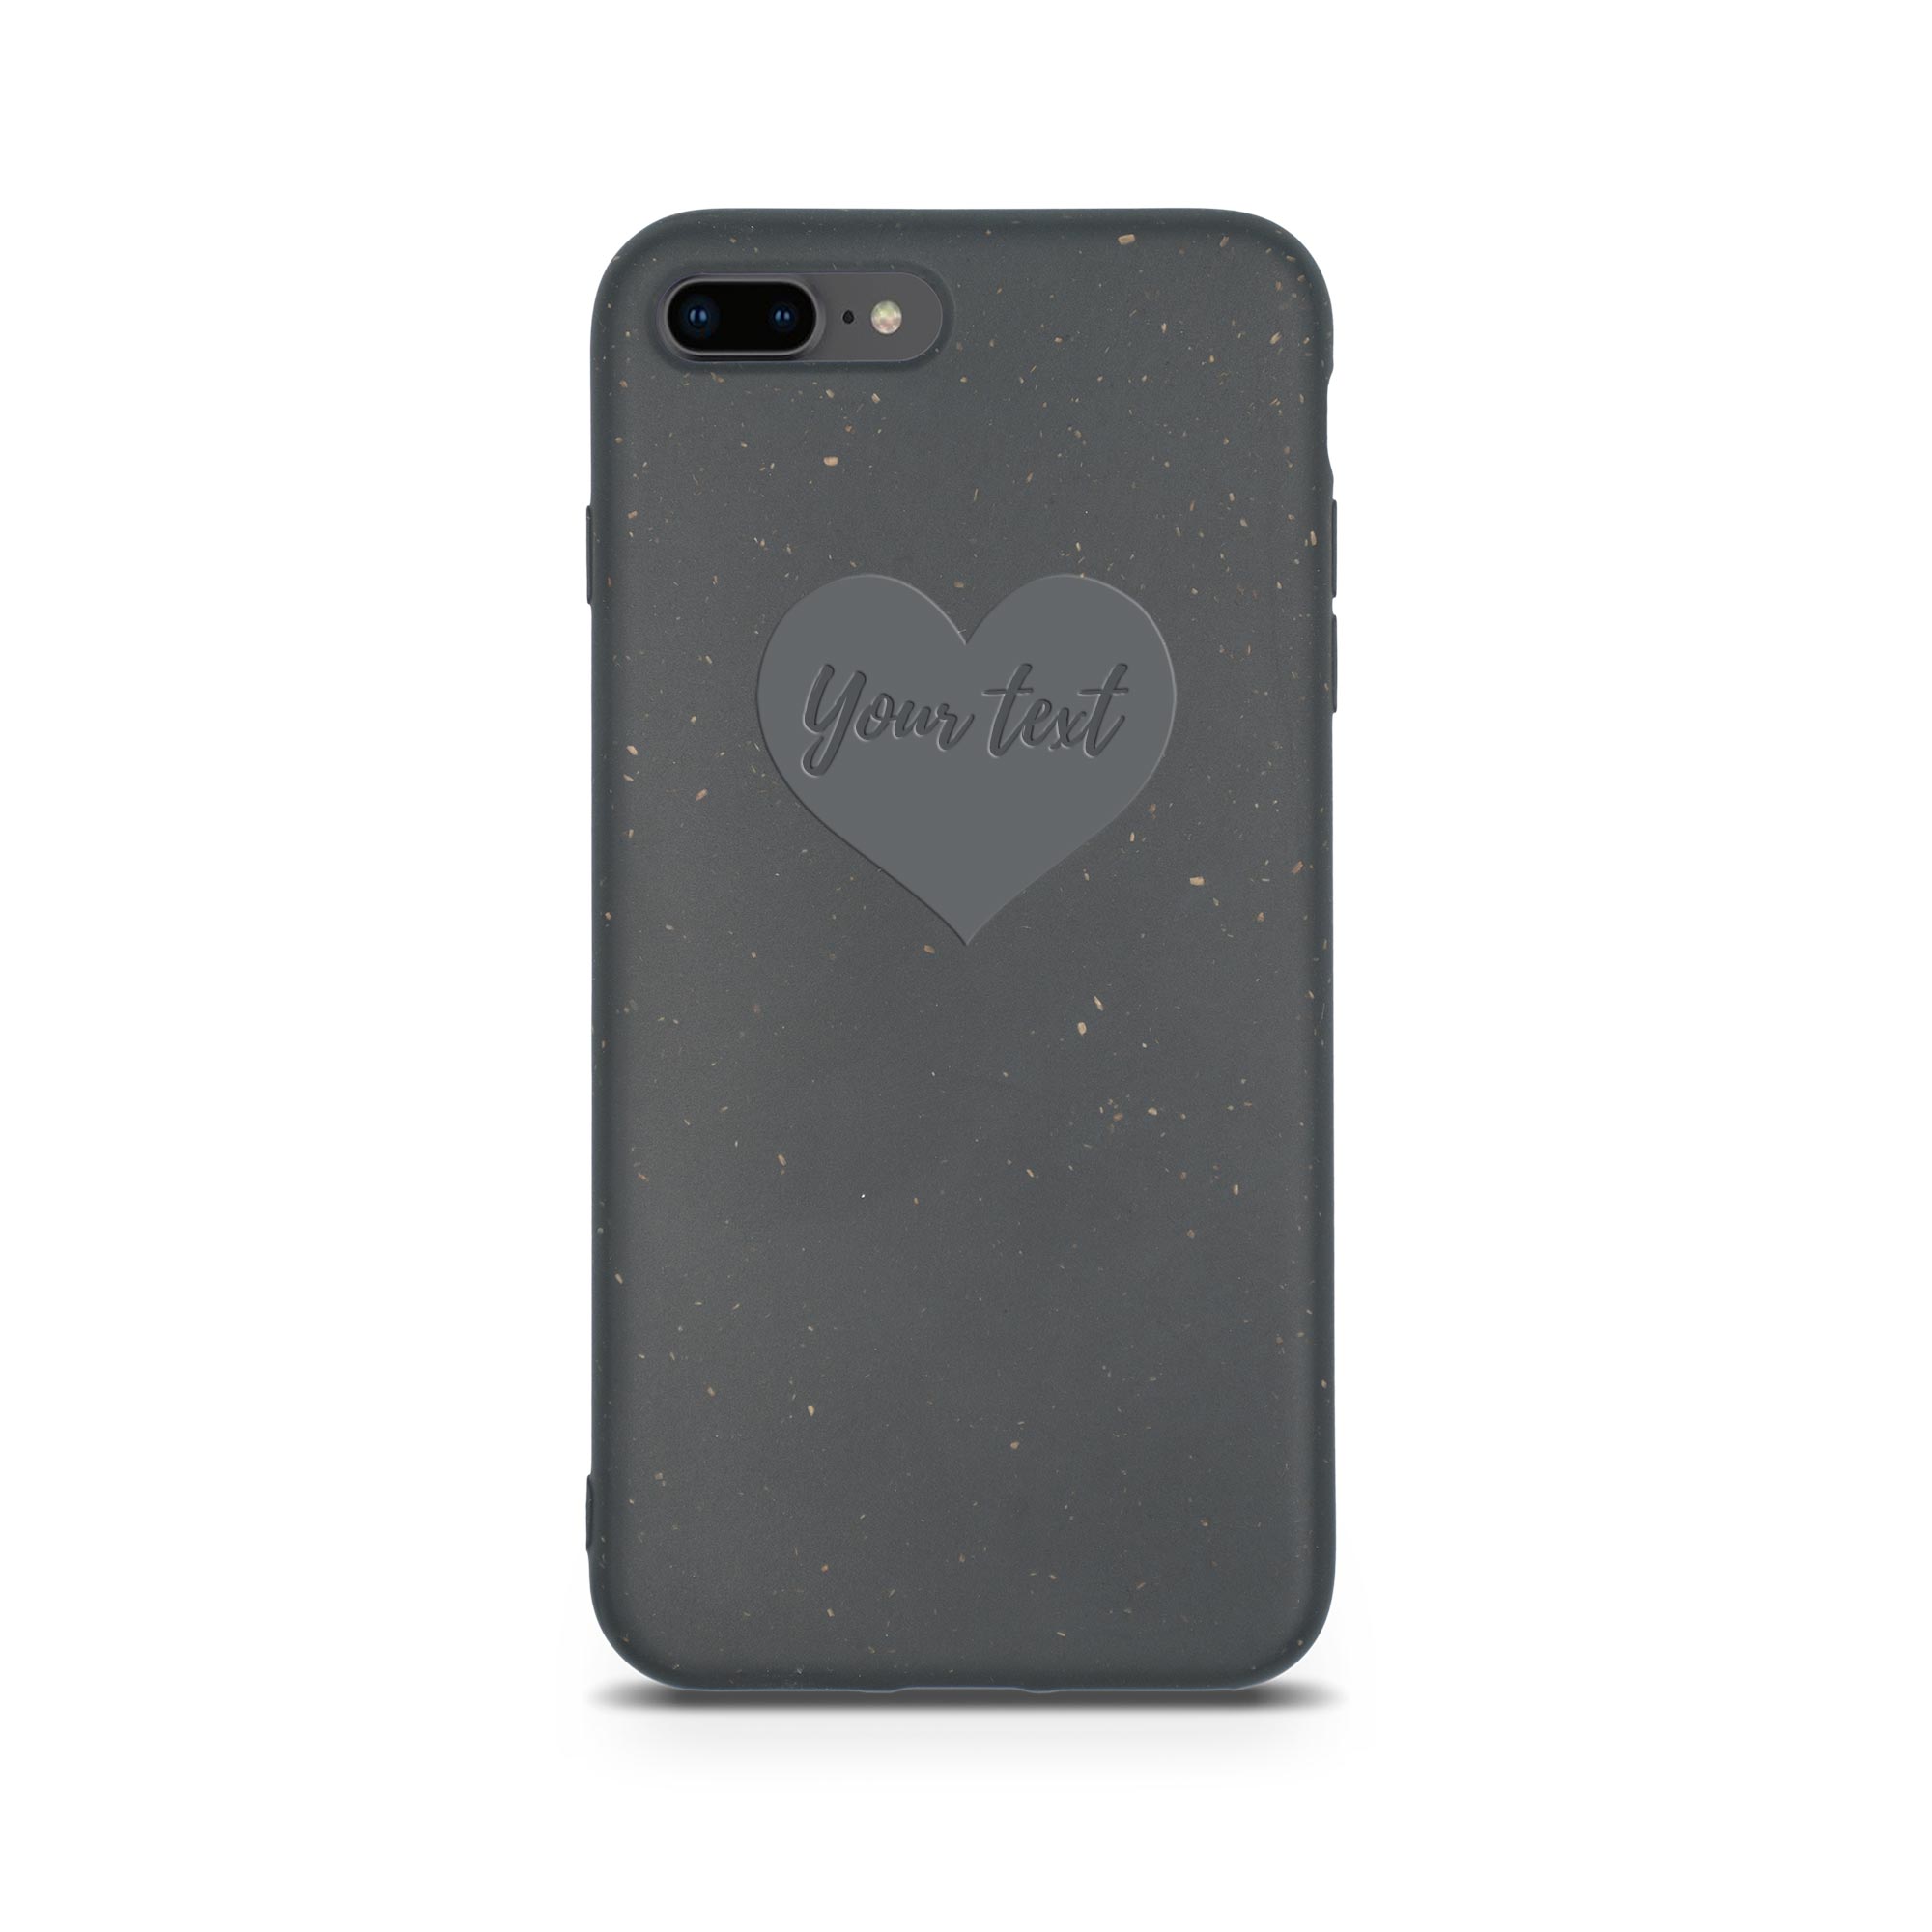 iPhone 8 Plus texto personalizado en carcasa de teléfono con forma de corazón